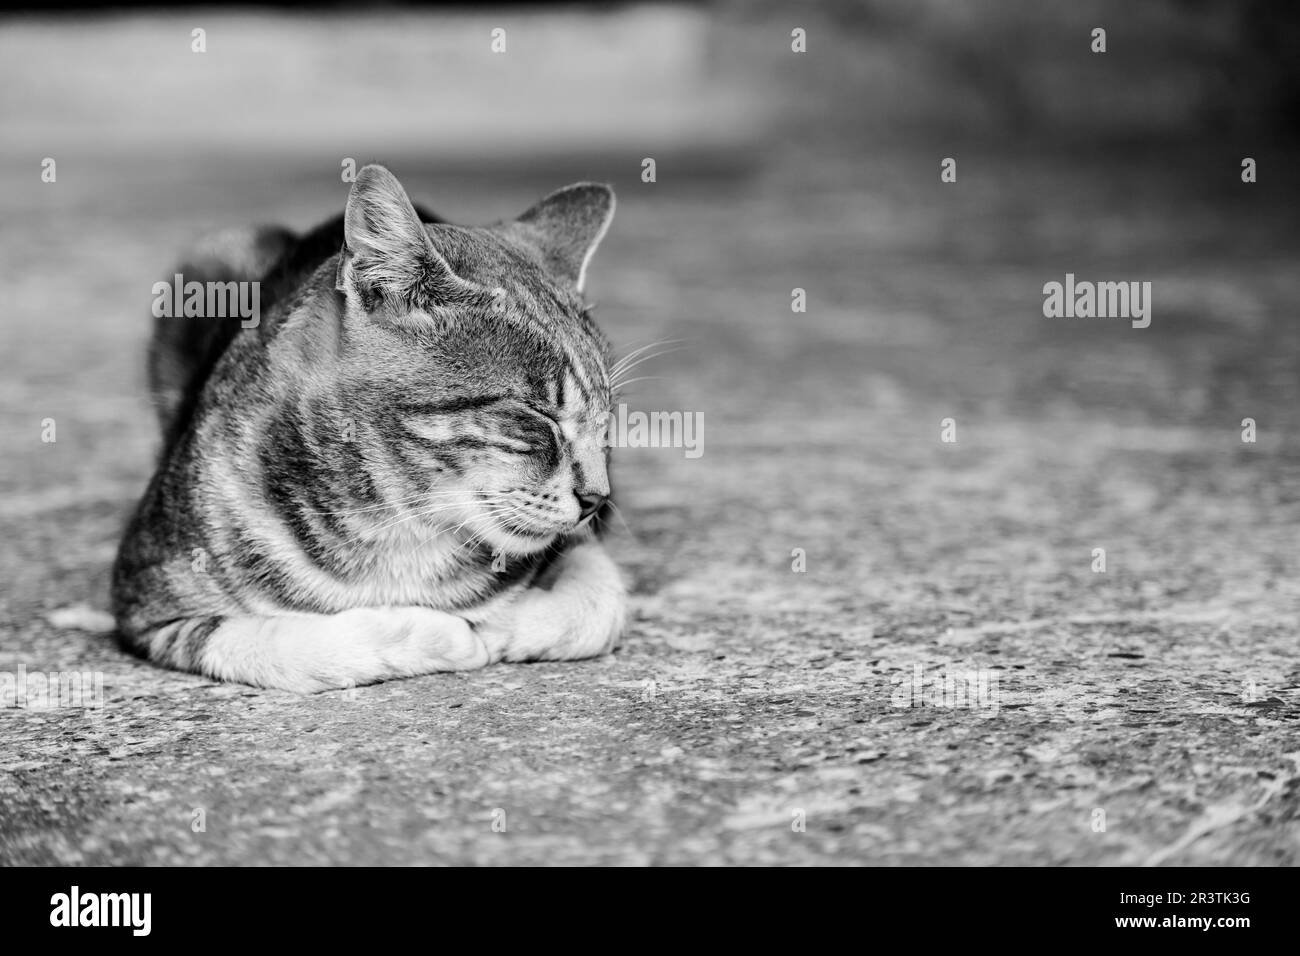 A cute European cat sleeping on stone Stock Photo